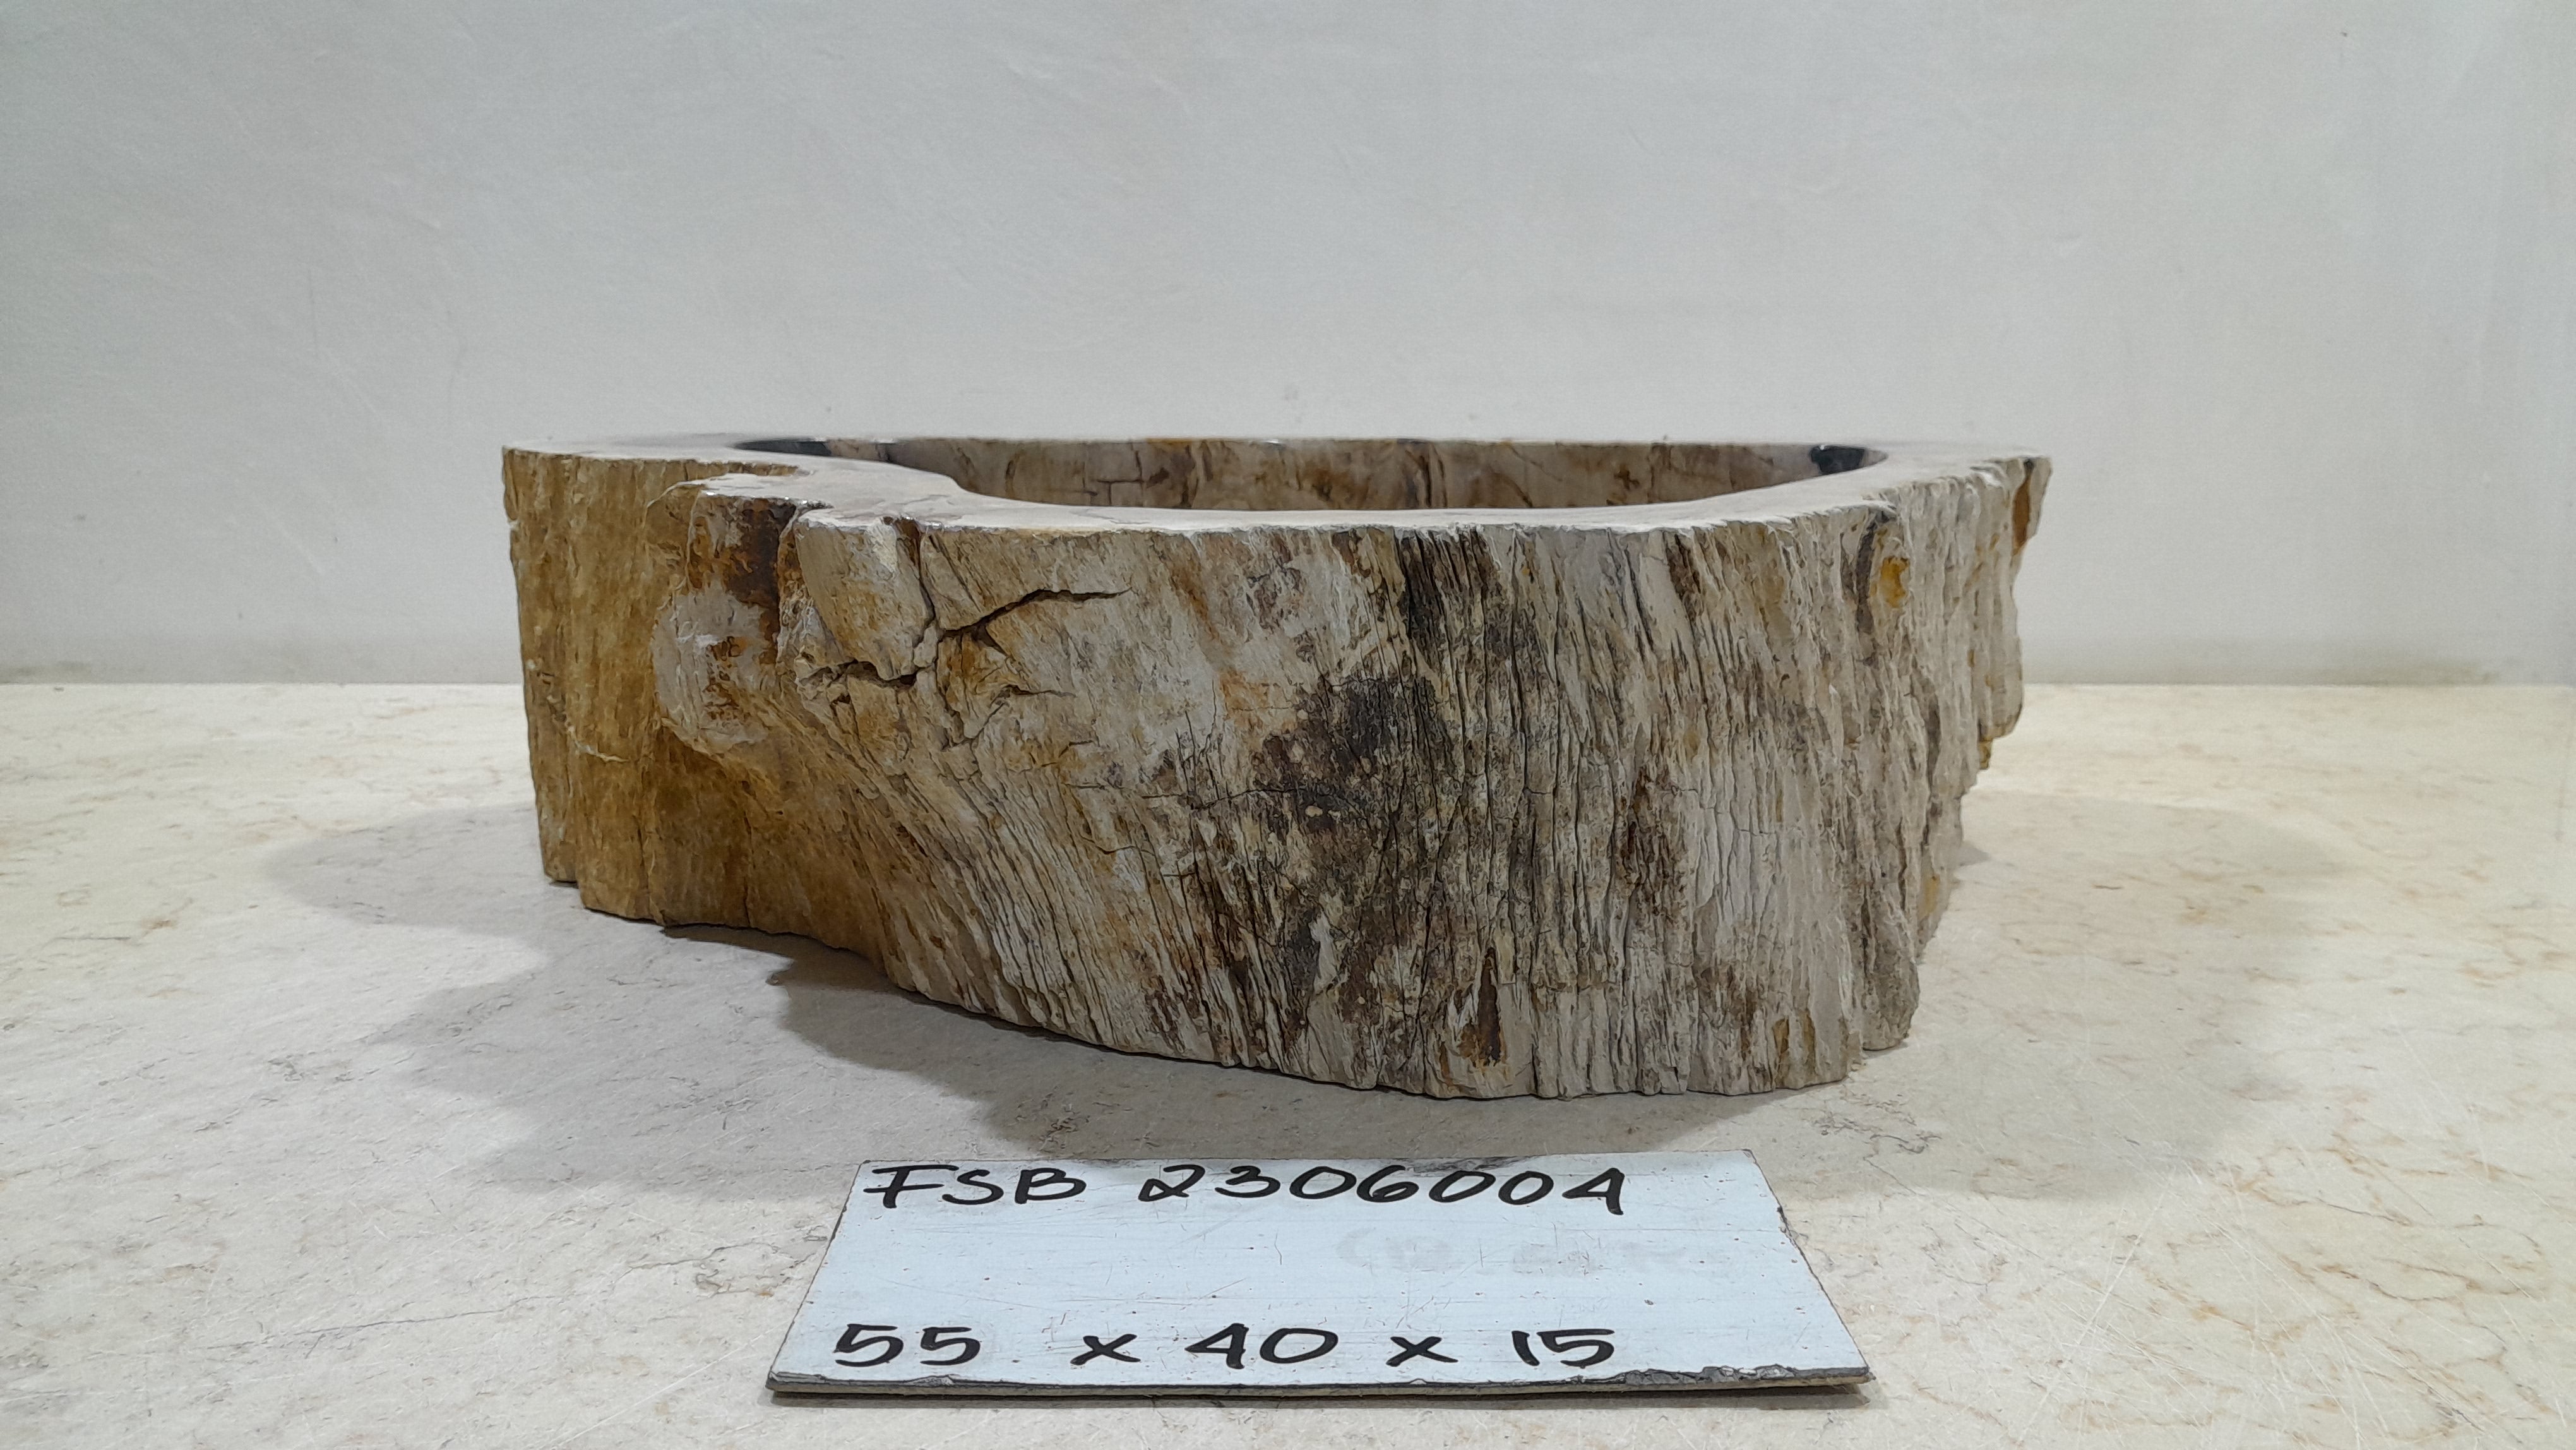 Natural Handmade Petrified Wood Basin - FSB506004